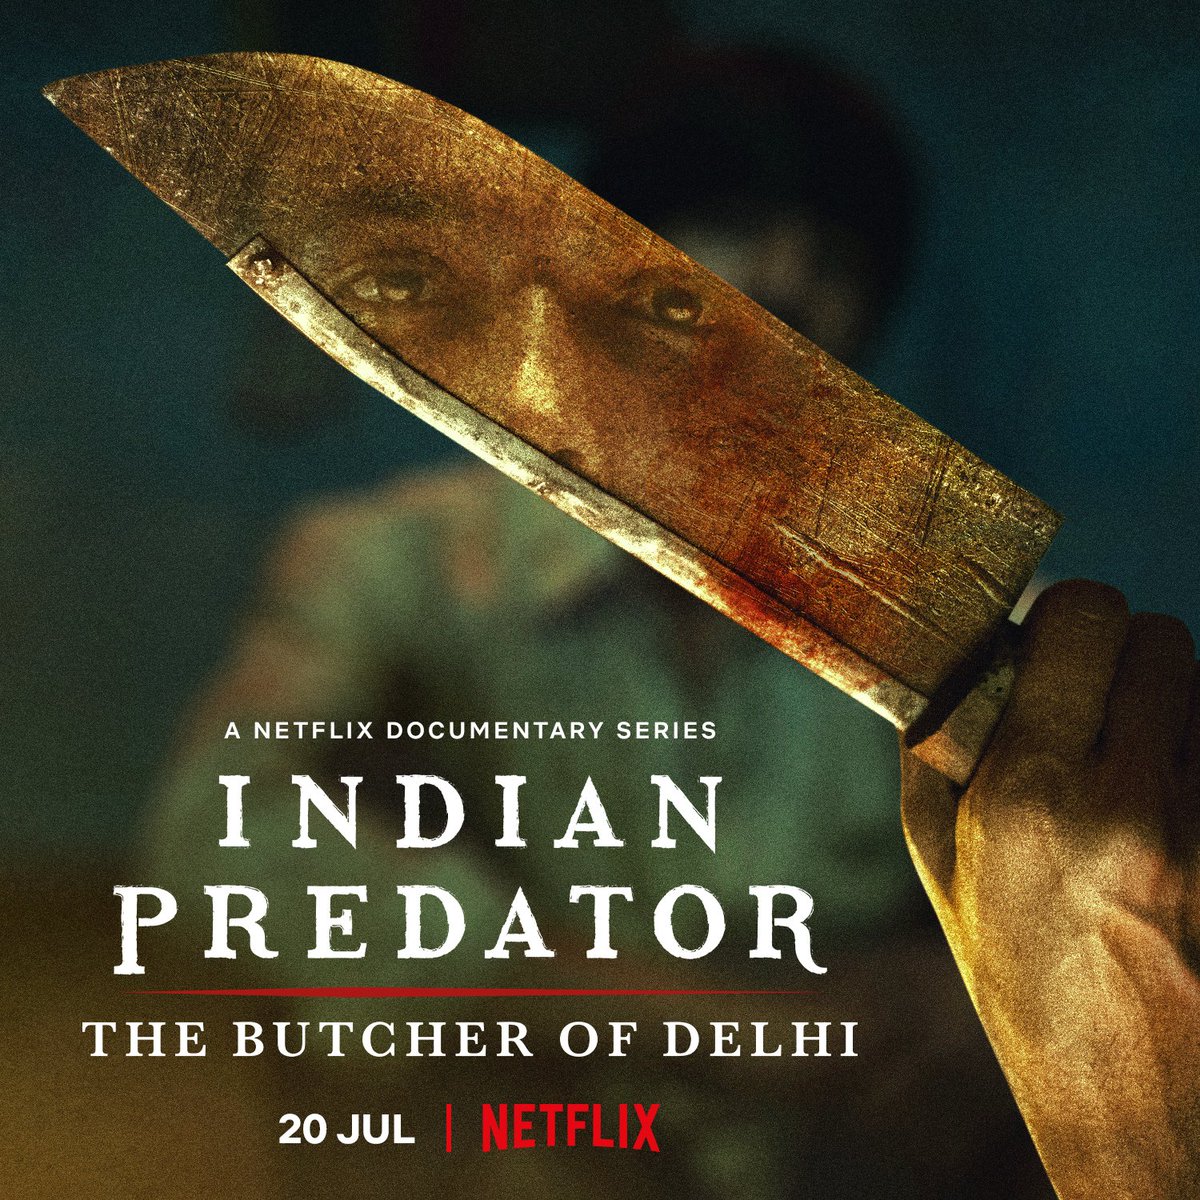 Indian Predator: The Butcher of Delhi (2022)
Netflixලා Documentary Series හදන එකනම් ලෙසටම කරනවා 🙂

#NandiyasMDb #IndianPredatorTheButcherOfDelhi
#IndianPredator #TheButcherOfDelhi